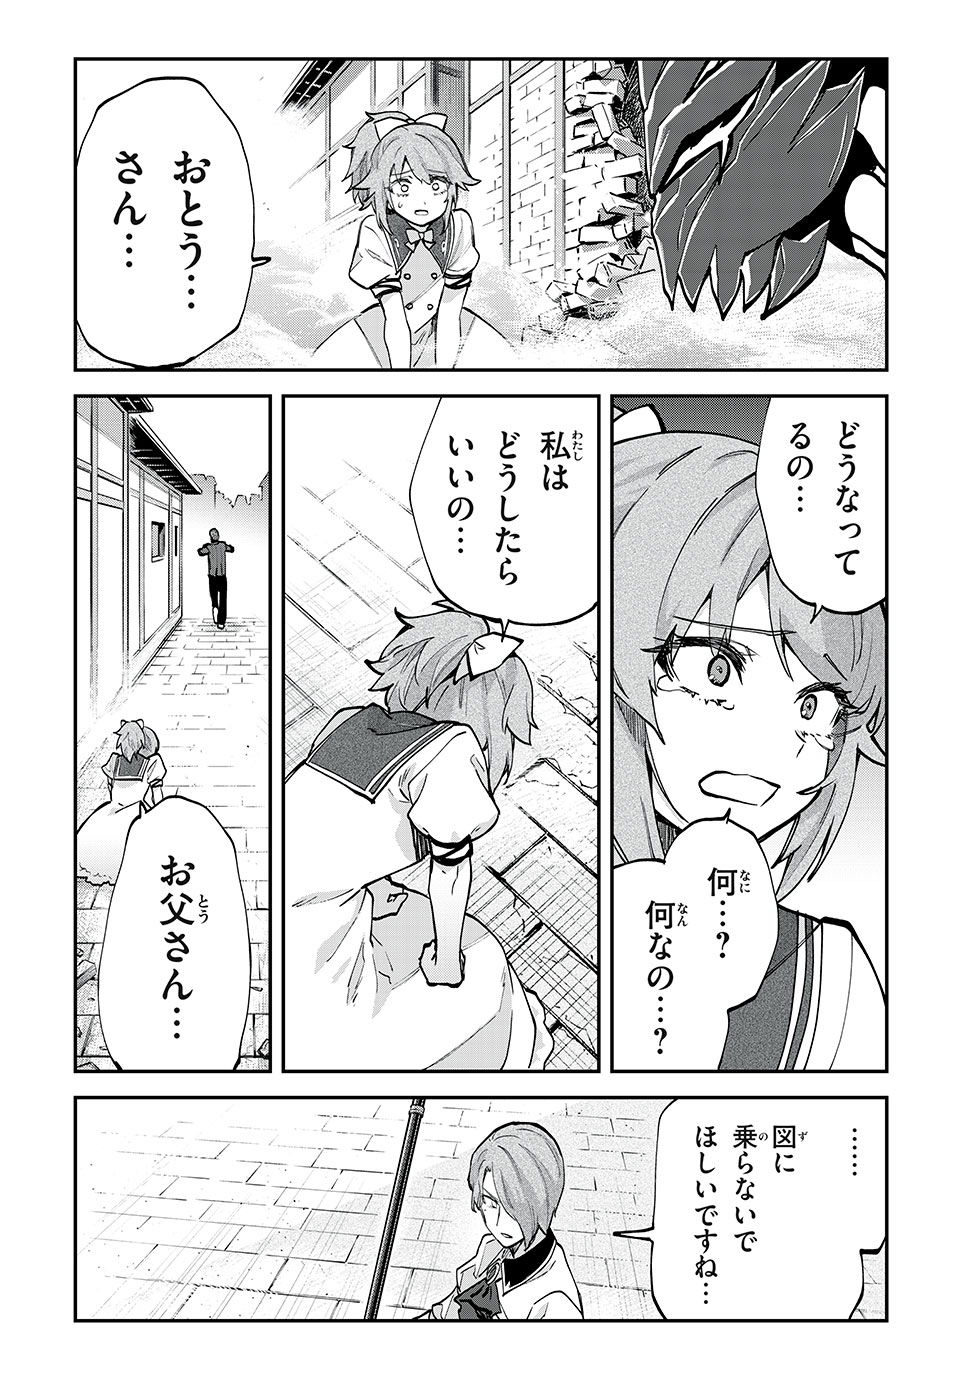 Tales of Crestoria – Togabito no Saika - Chapter 37 - Page 8